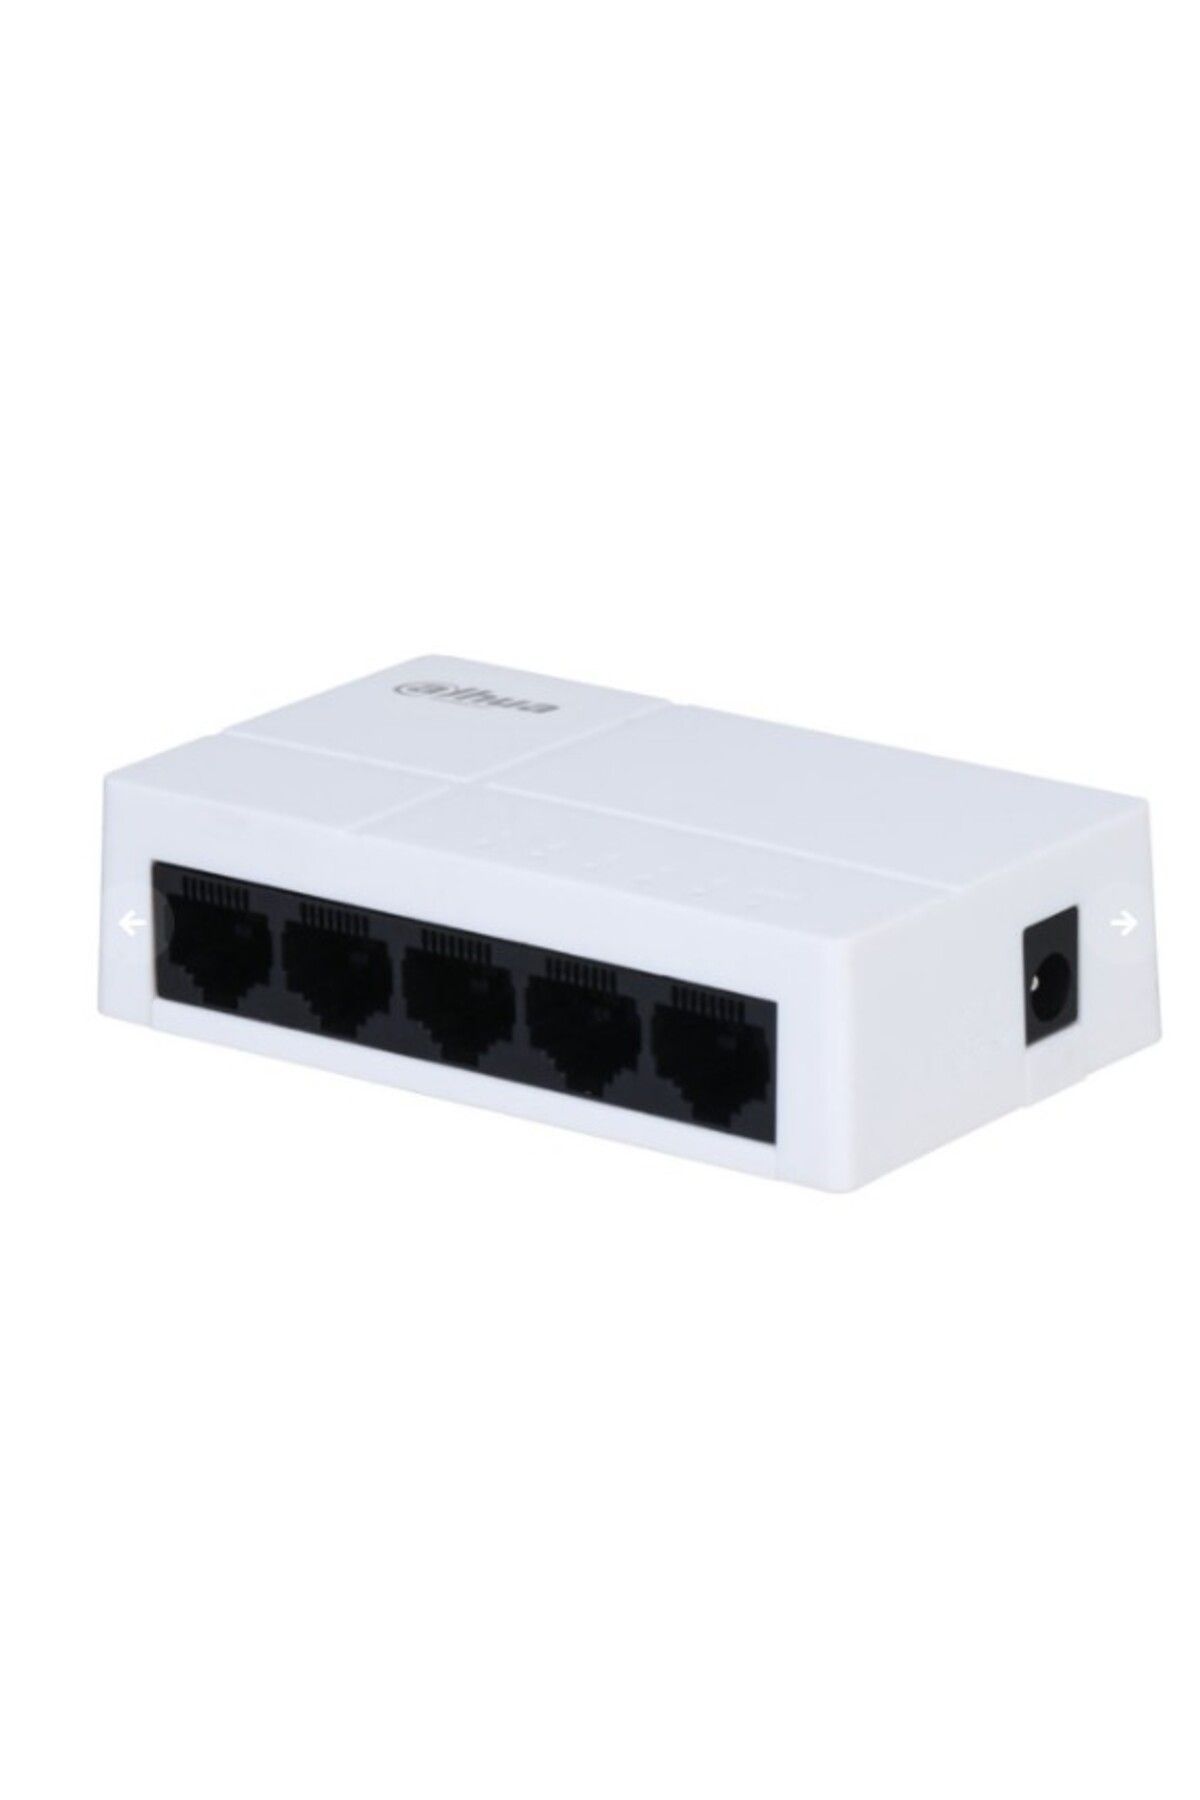 Dahua PFS3005-5GT-L 5 Port 10/100/1000 Switch